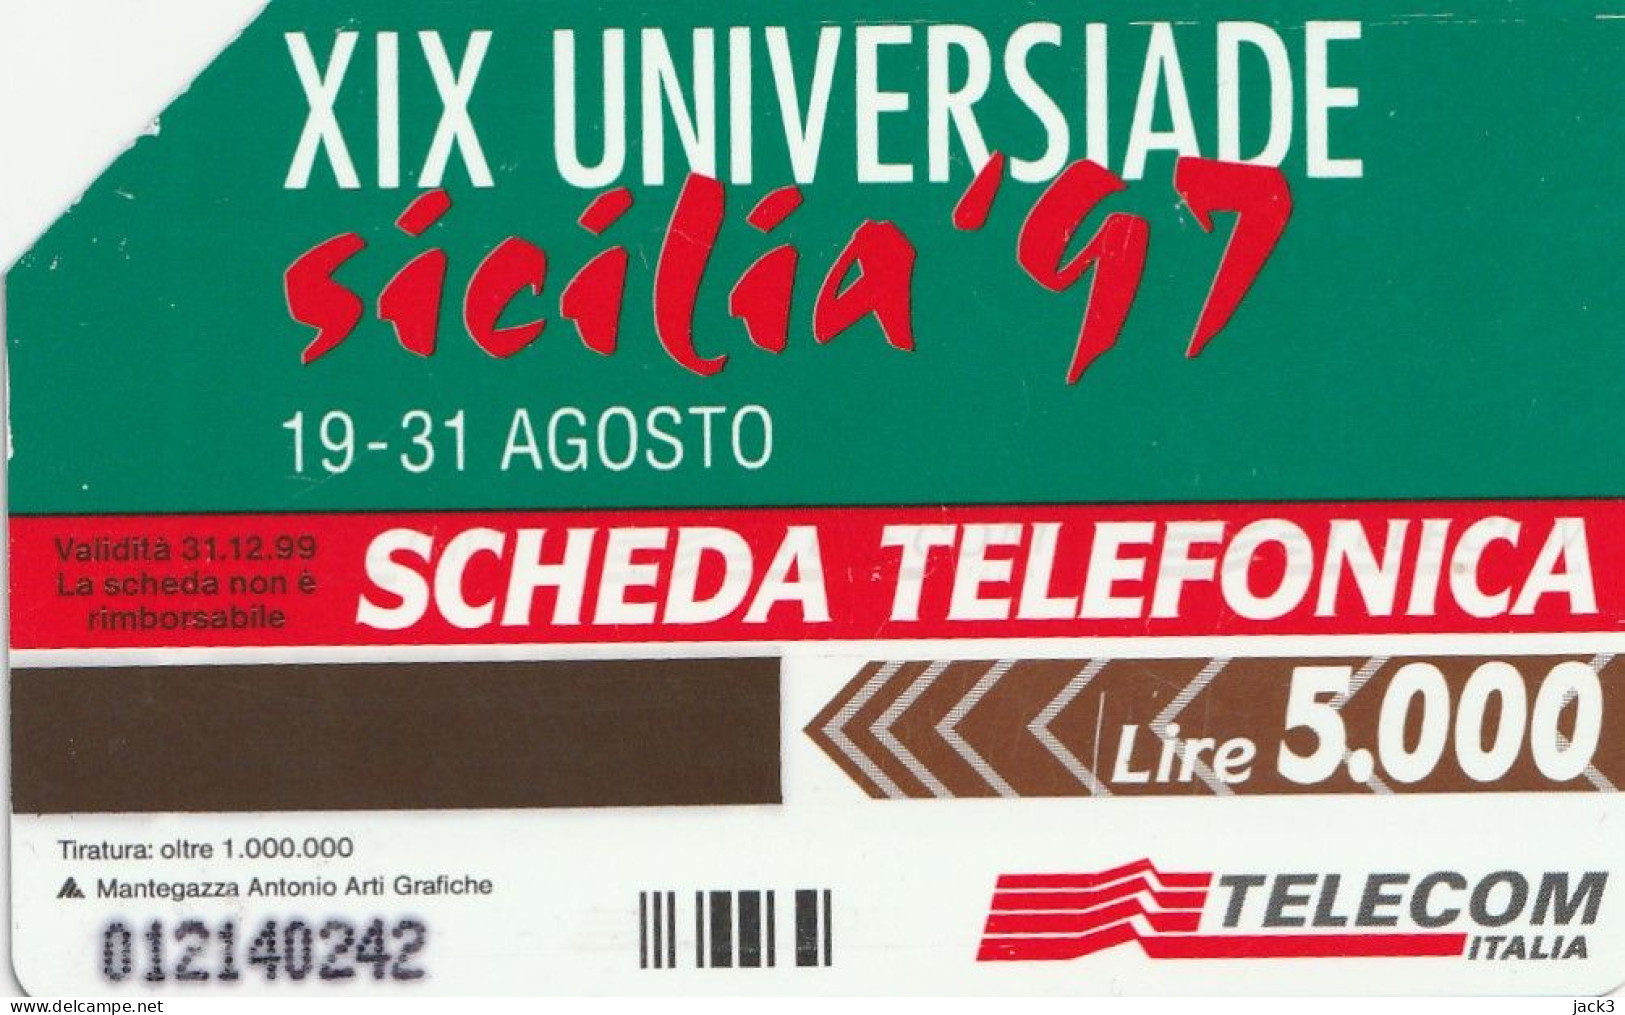 SCEDA TELEFONICA - XIX UNIVERSIADE - SICILIA '97 (2 SCANS) - Öff. Themen-TK